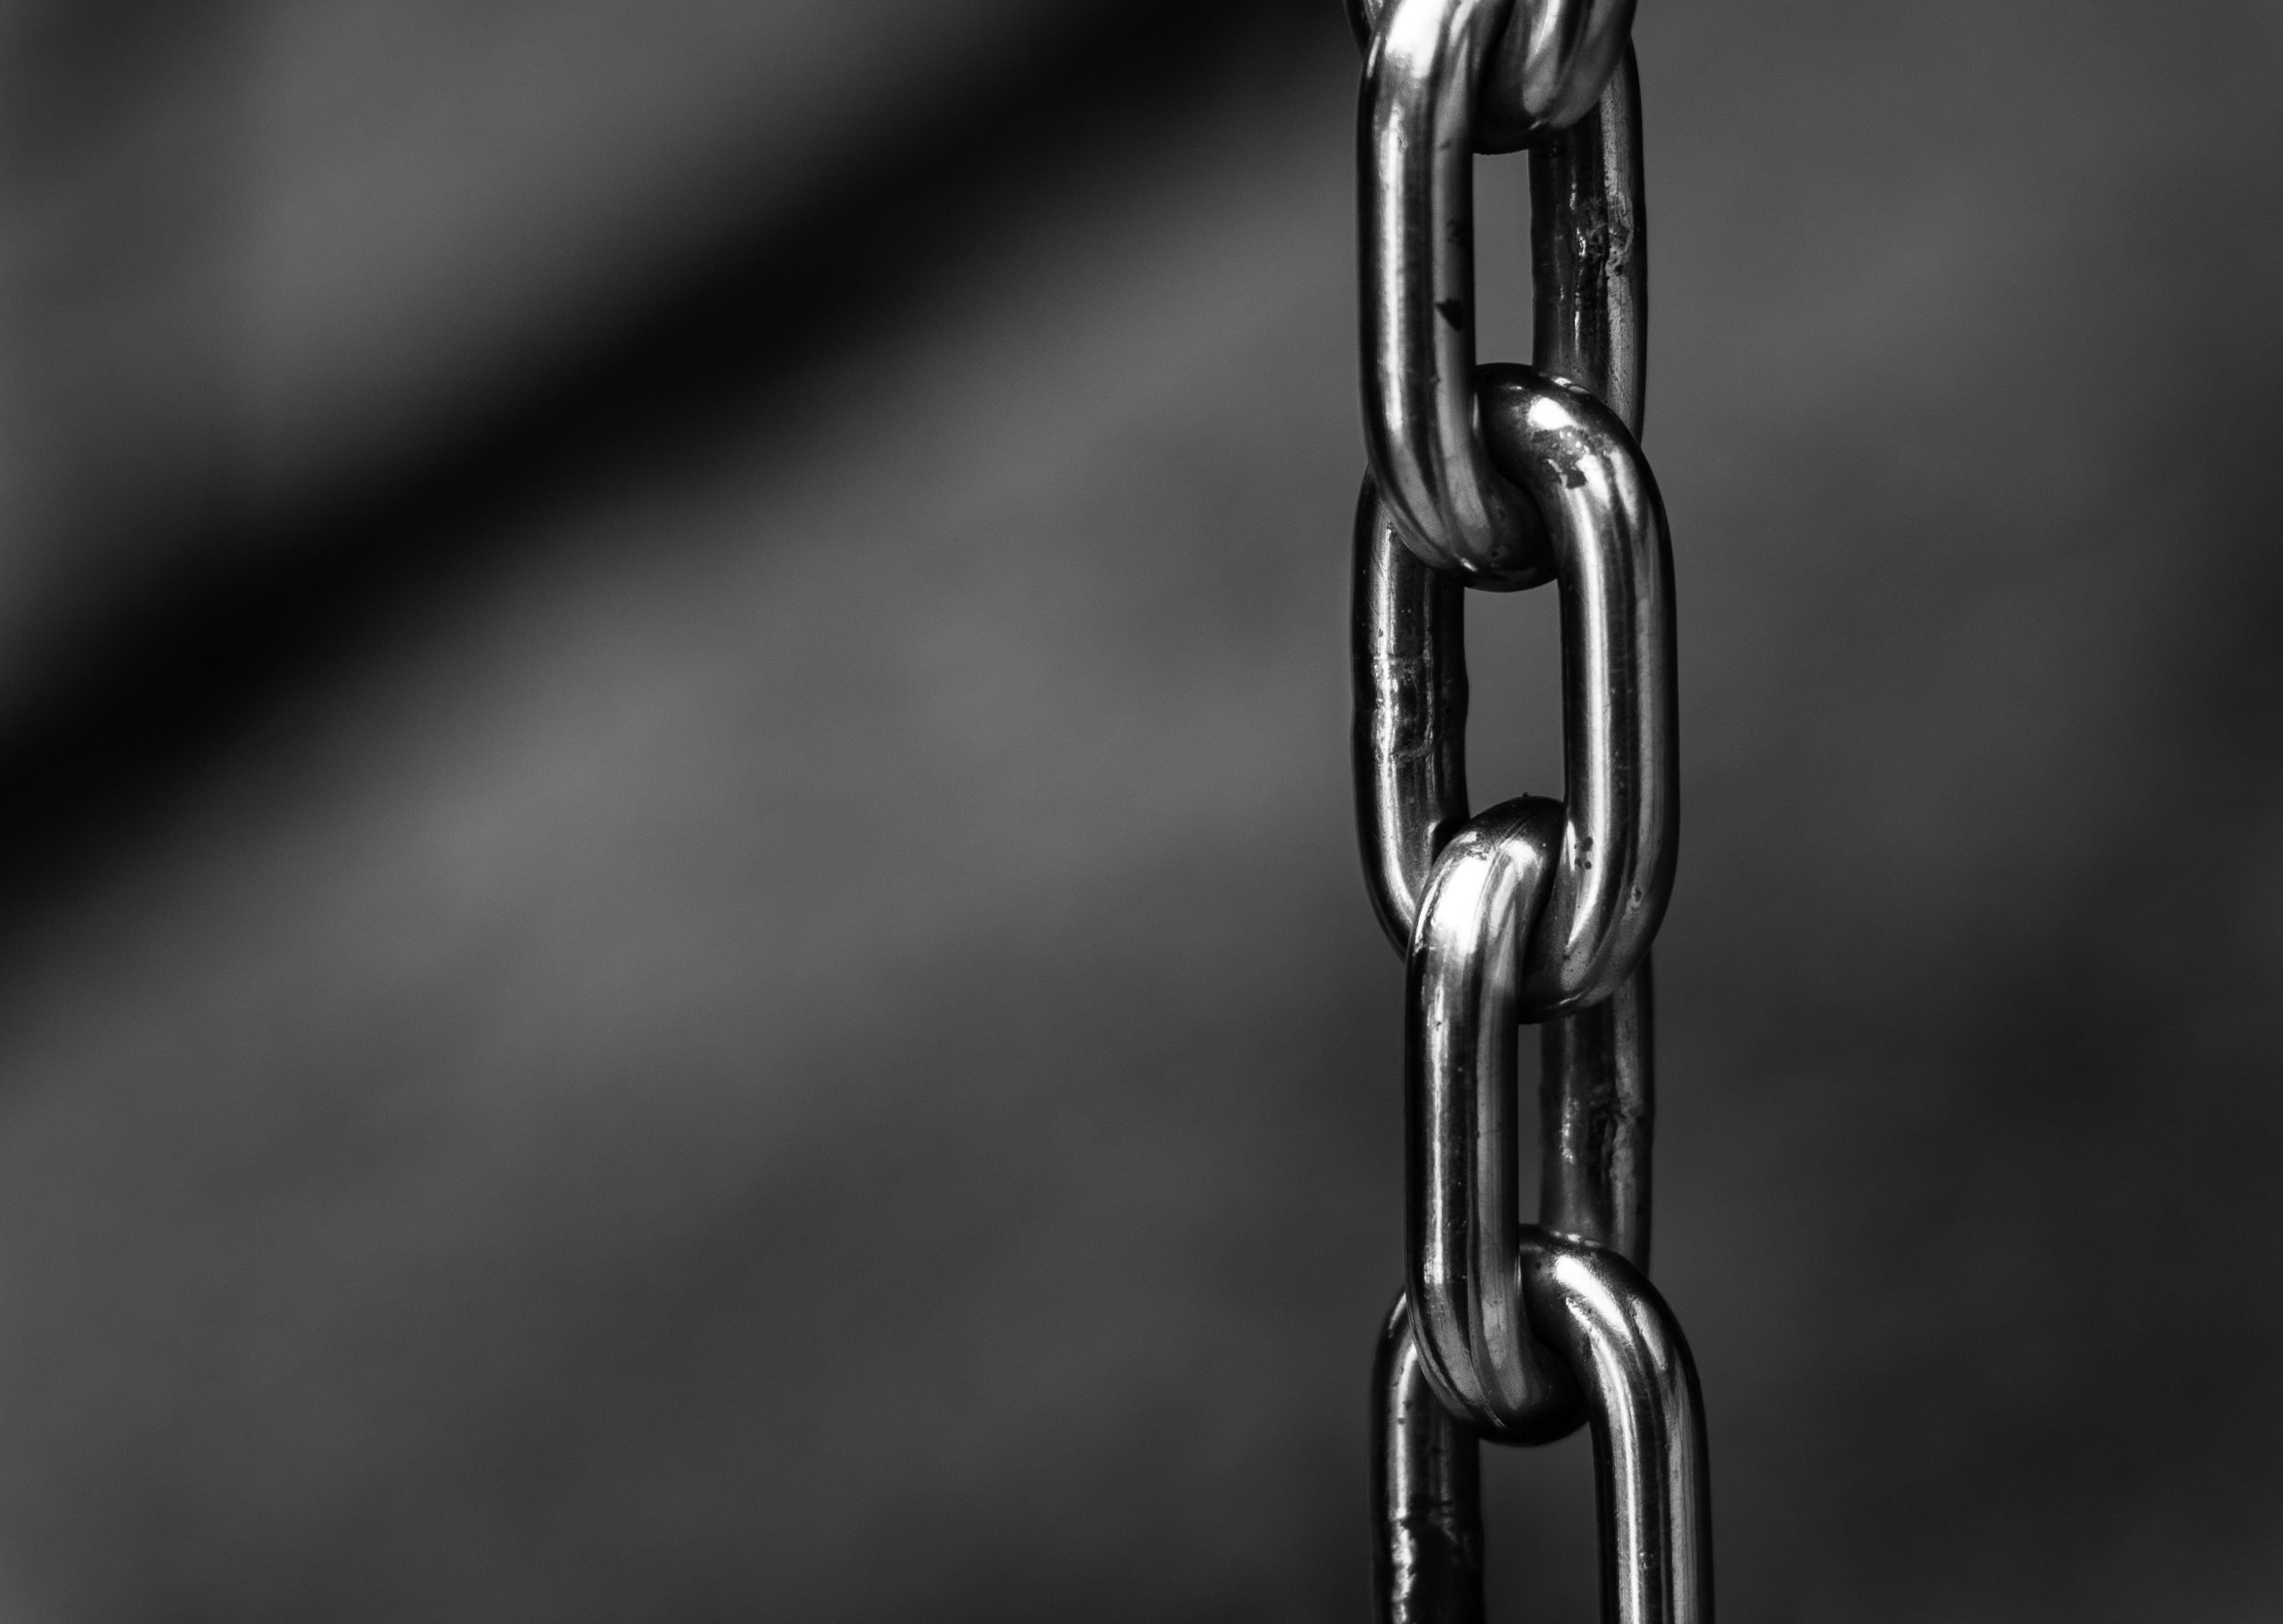 steel chain links